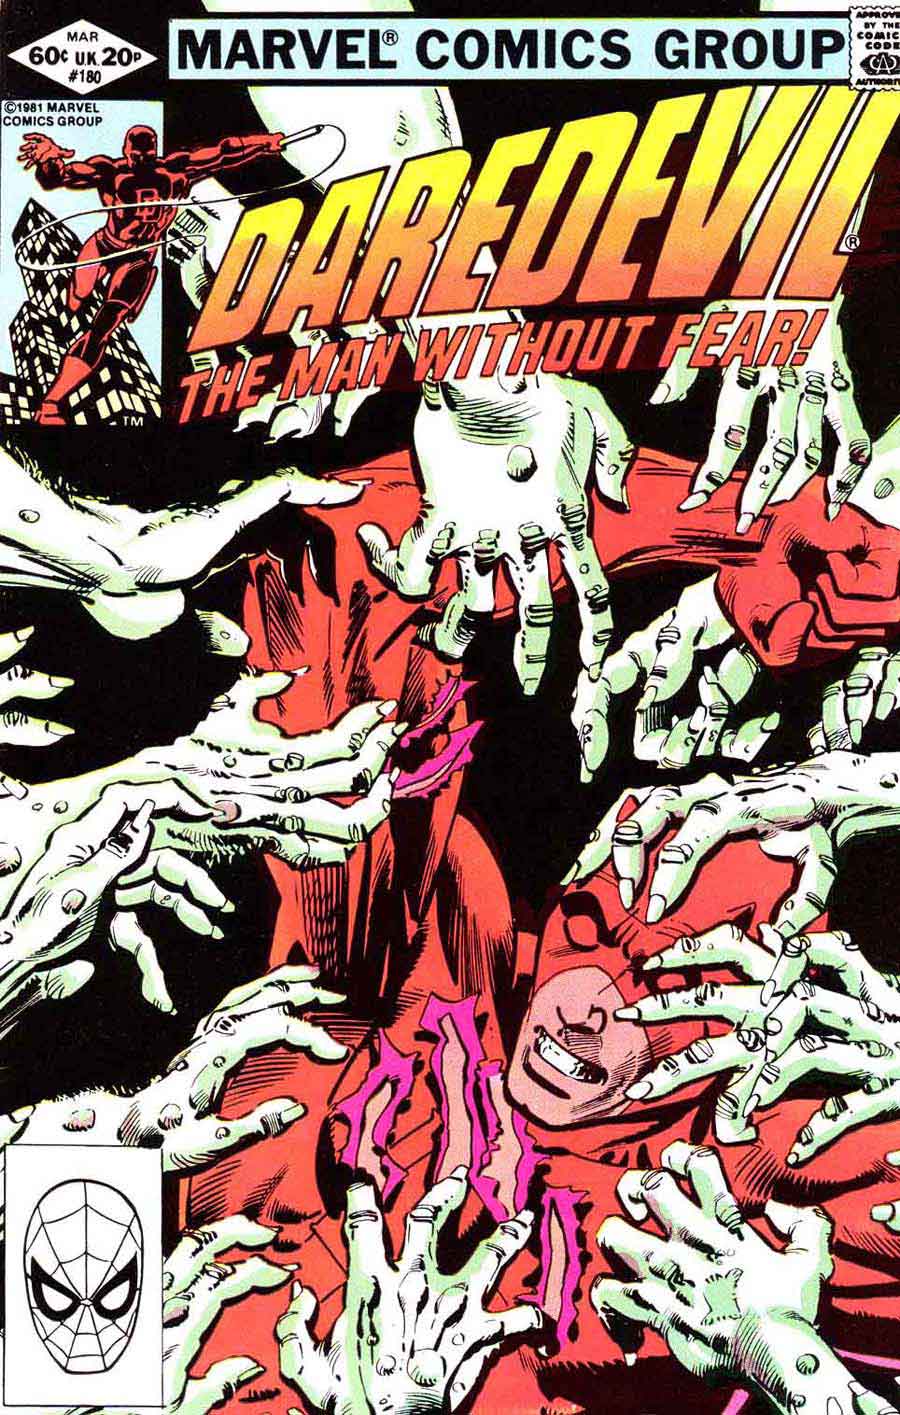 Daredevil v1 #180 marvel comic book cover art by Frank Miller